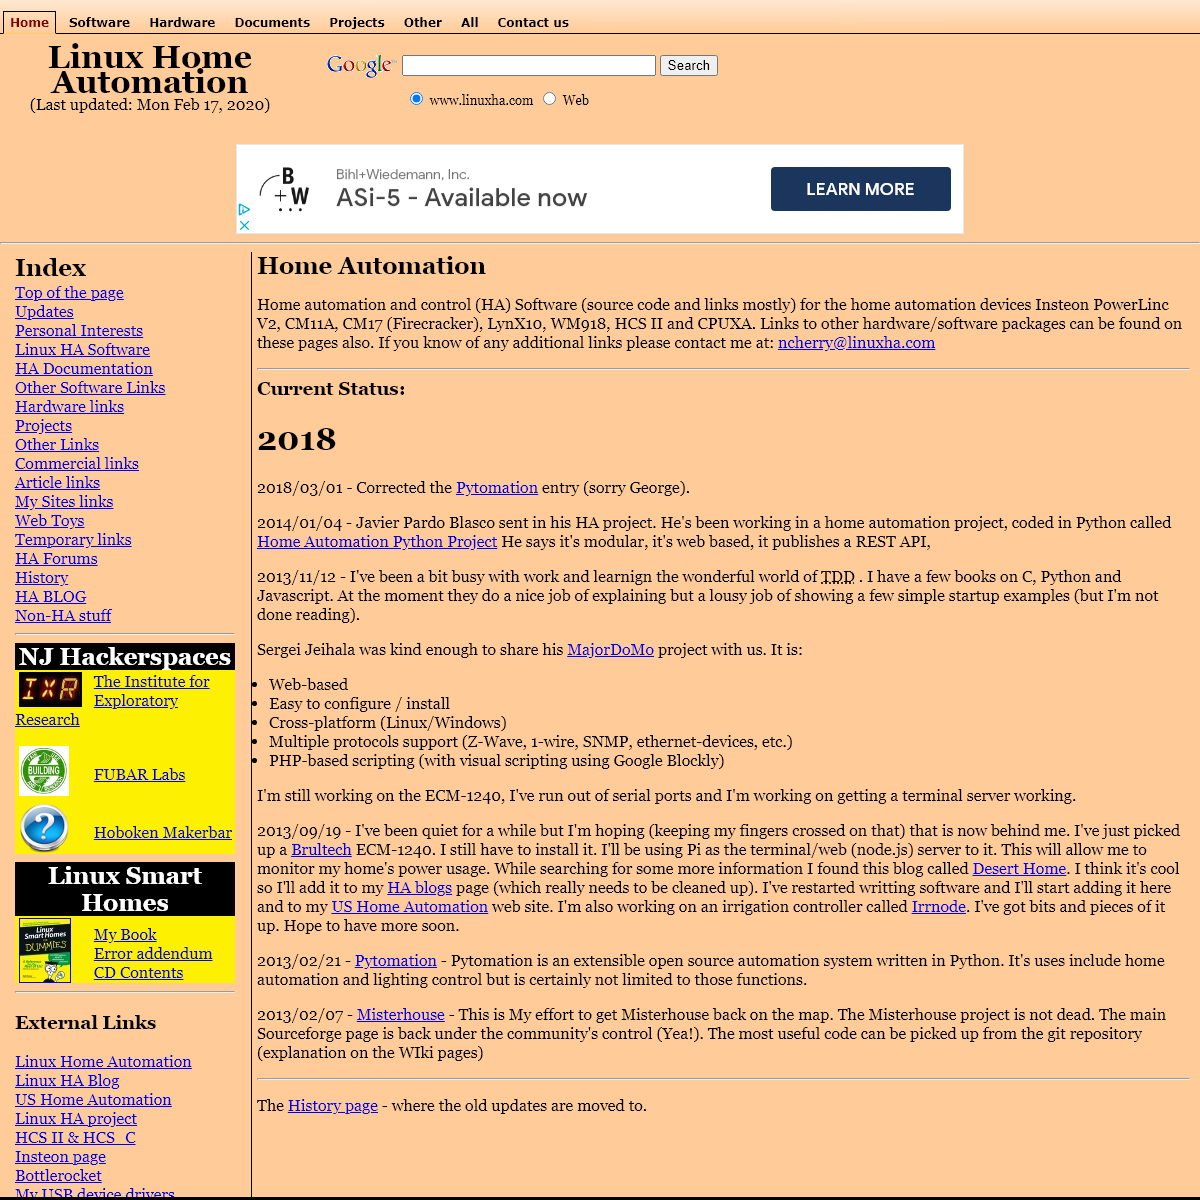 A complete backup of linuxha.com